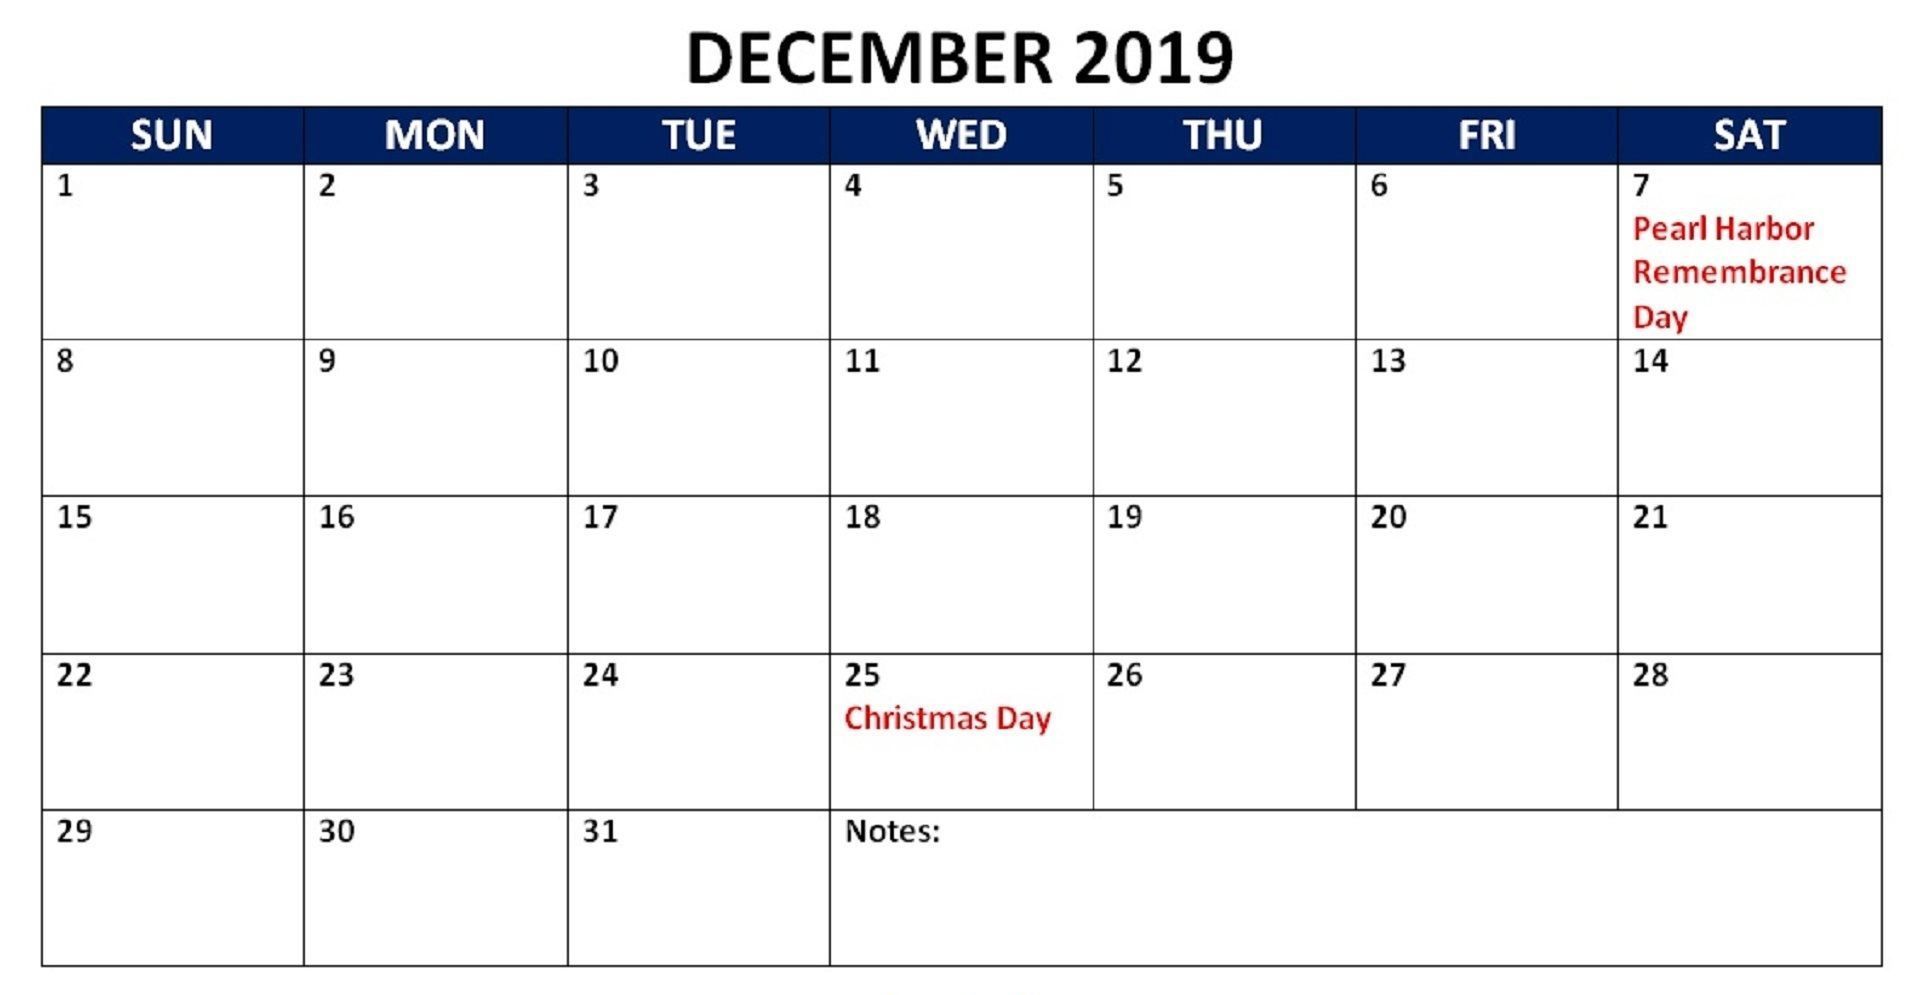 December Holidays 2019 Calendar